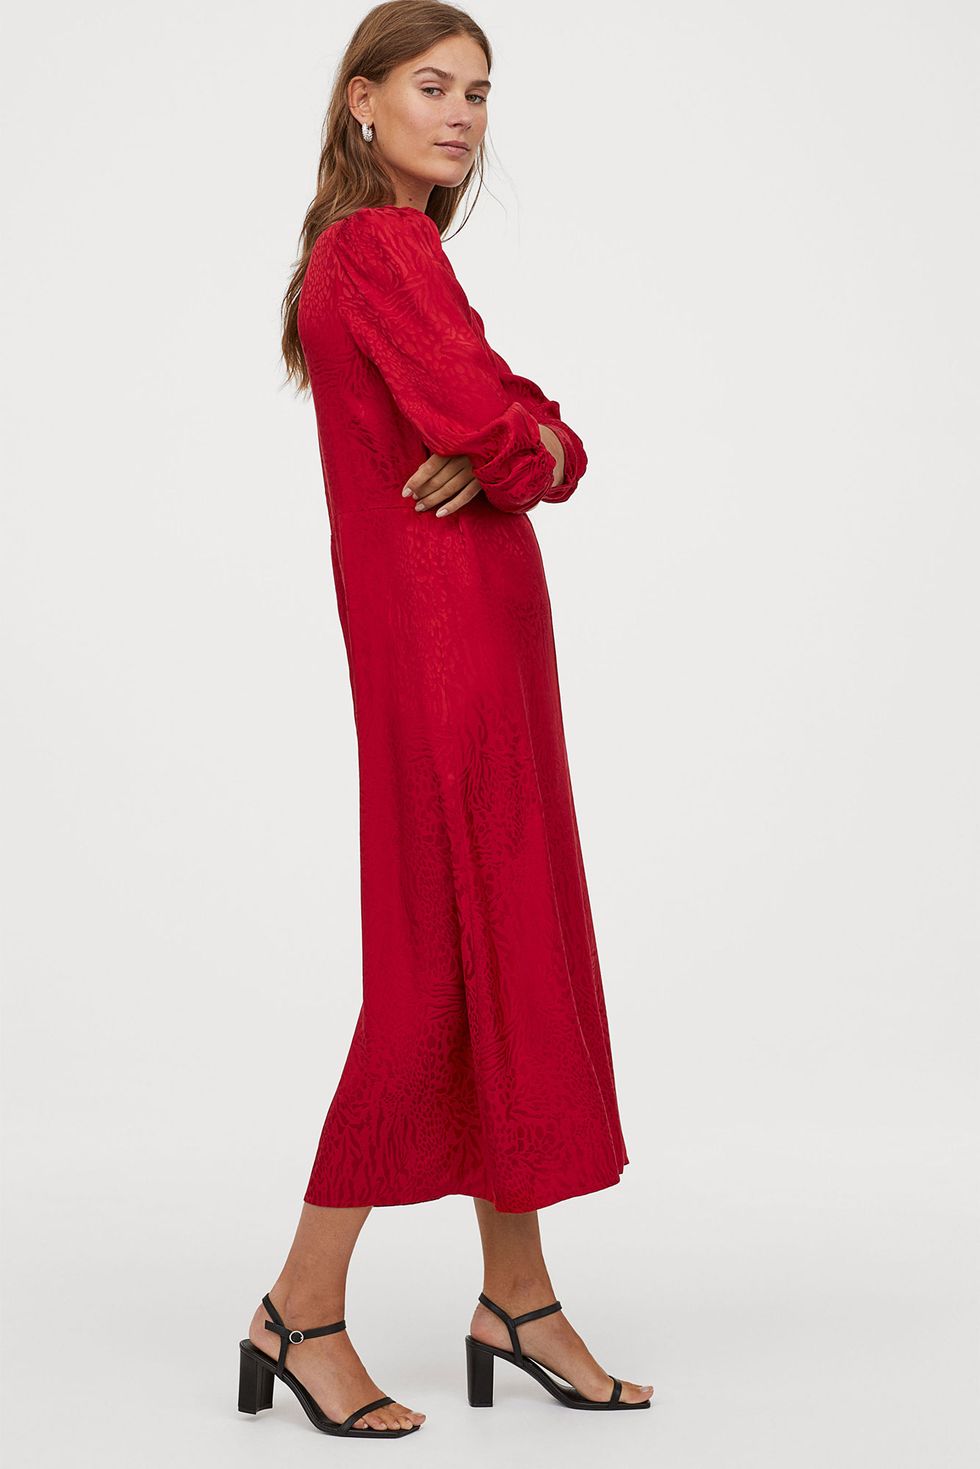 Este vestido rojo drapeado de manga H&M es lo mejor